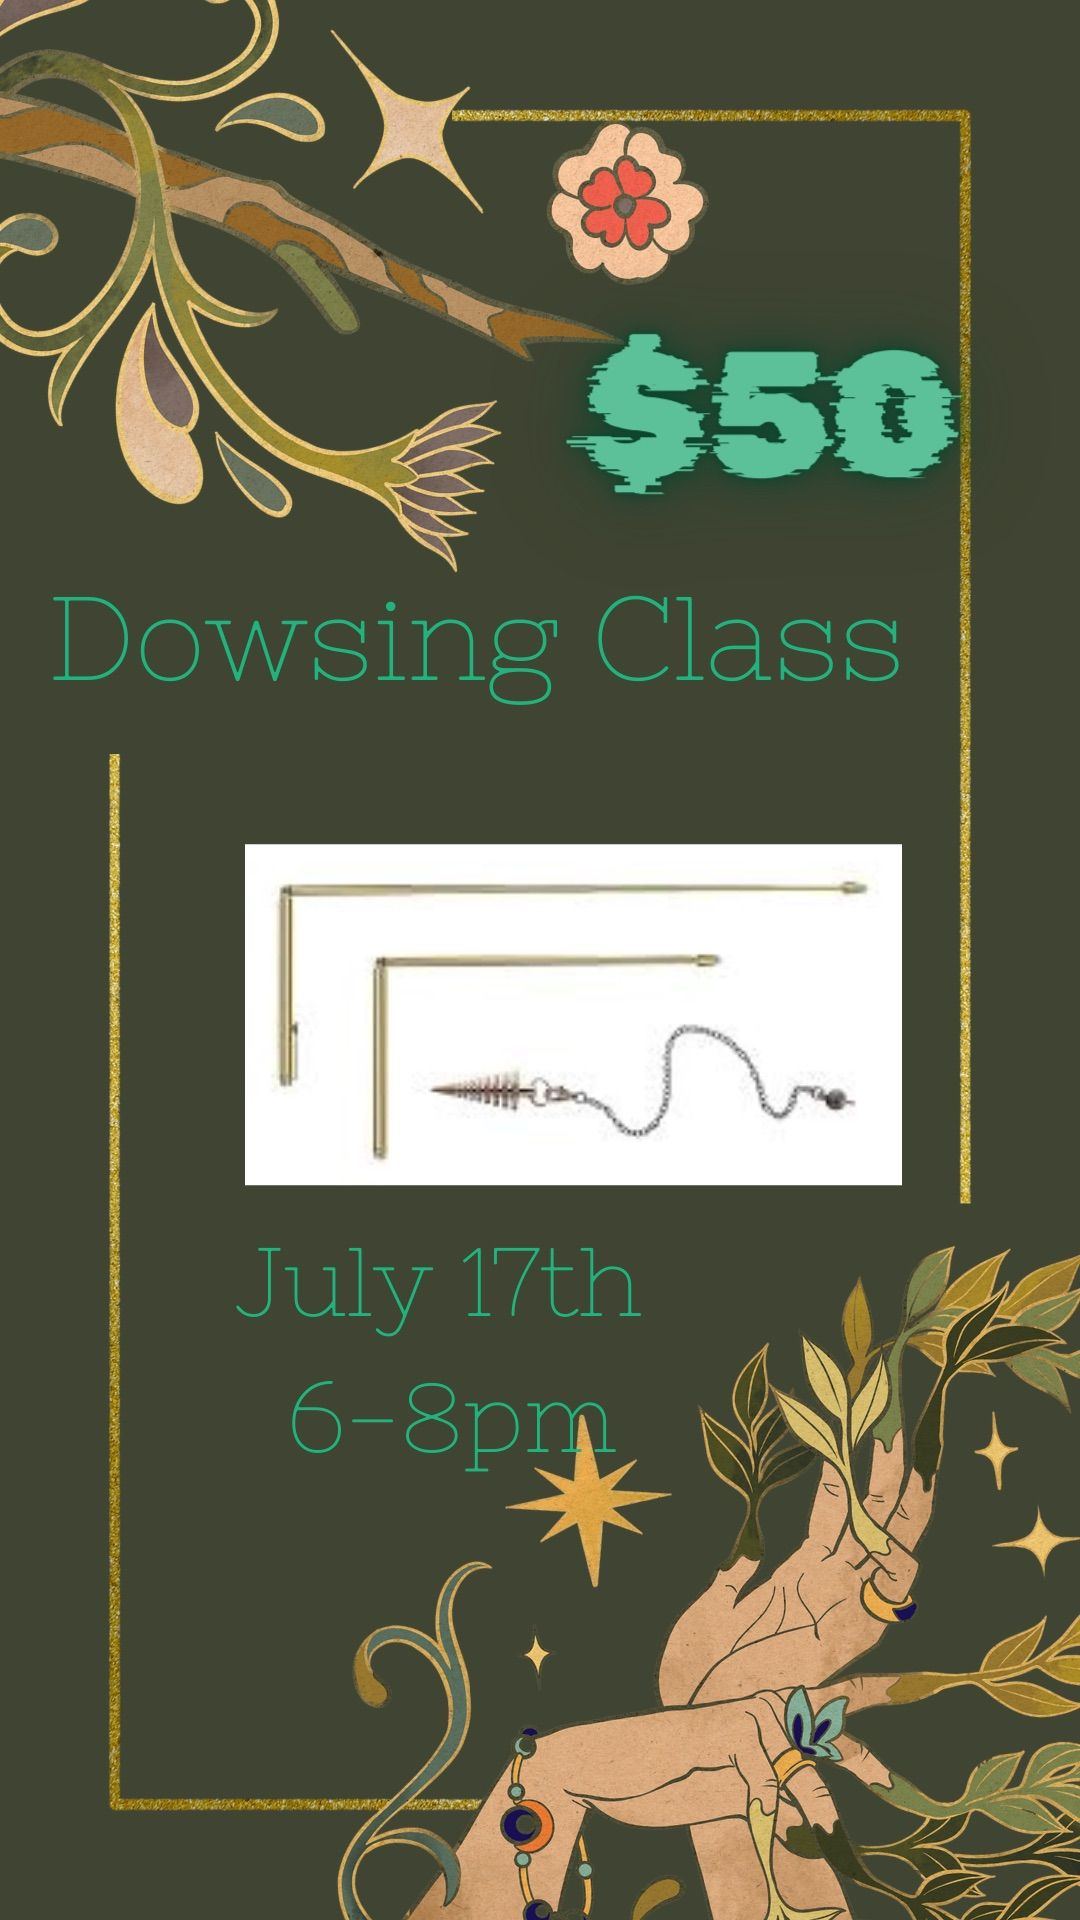 Dowsing class 